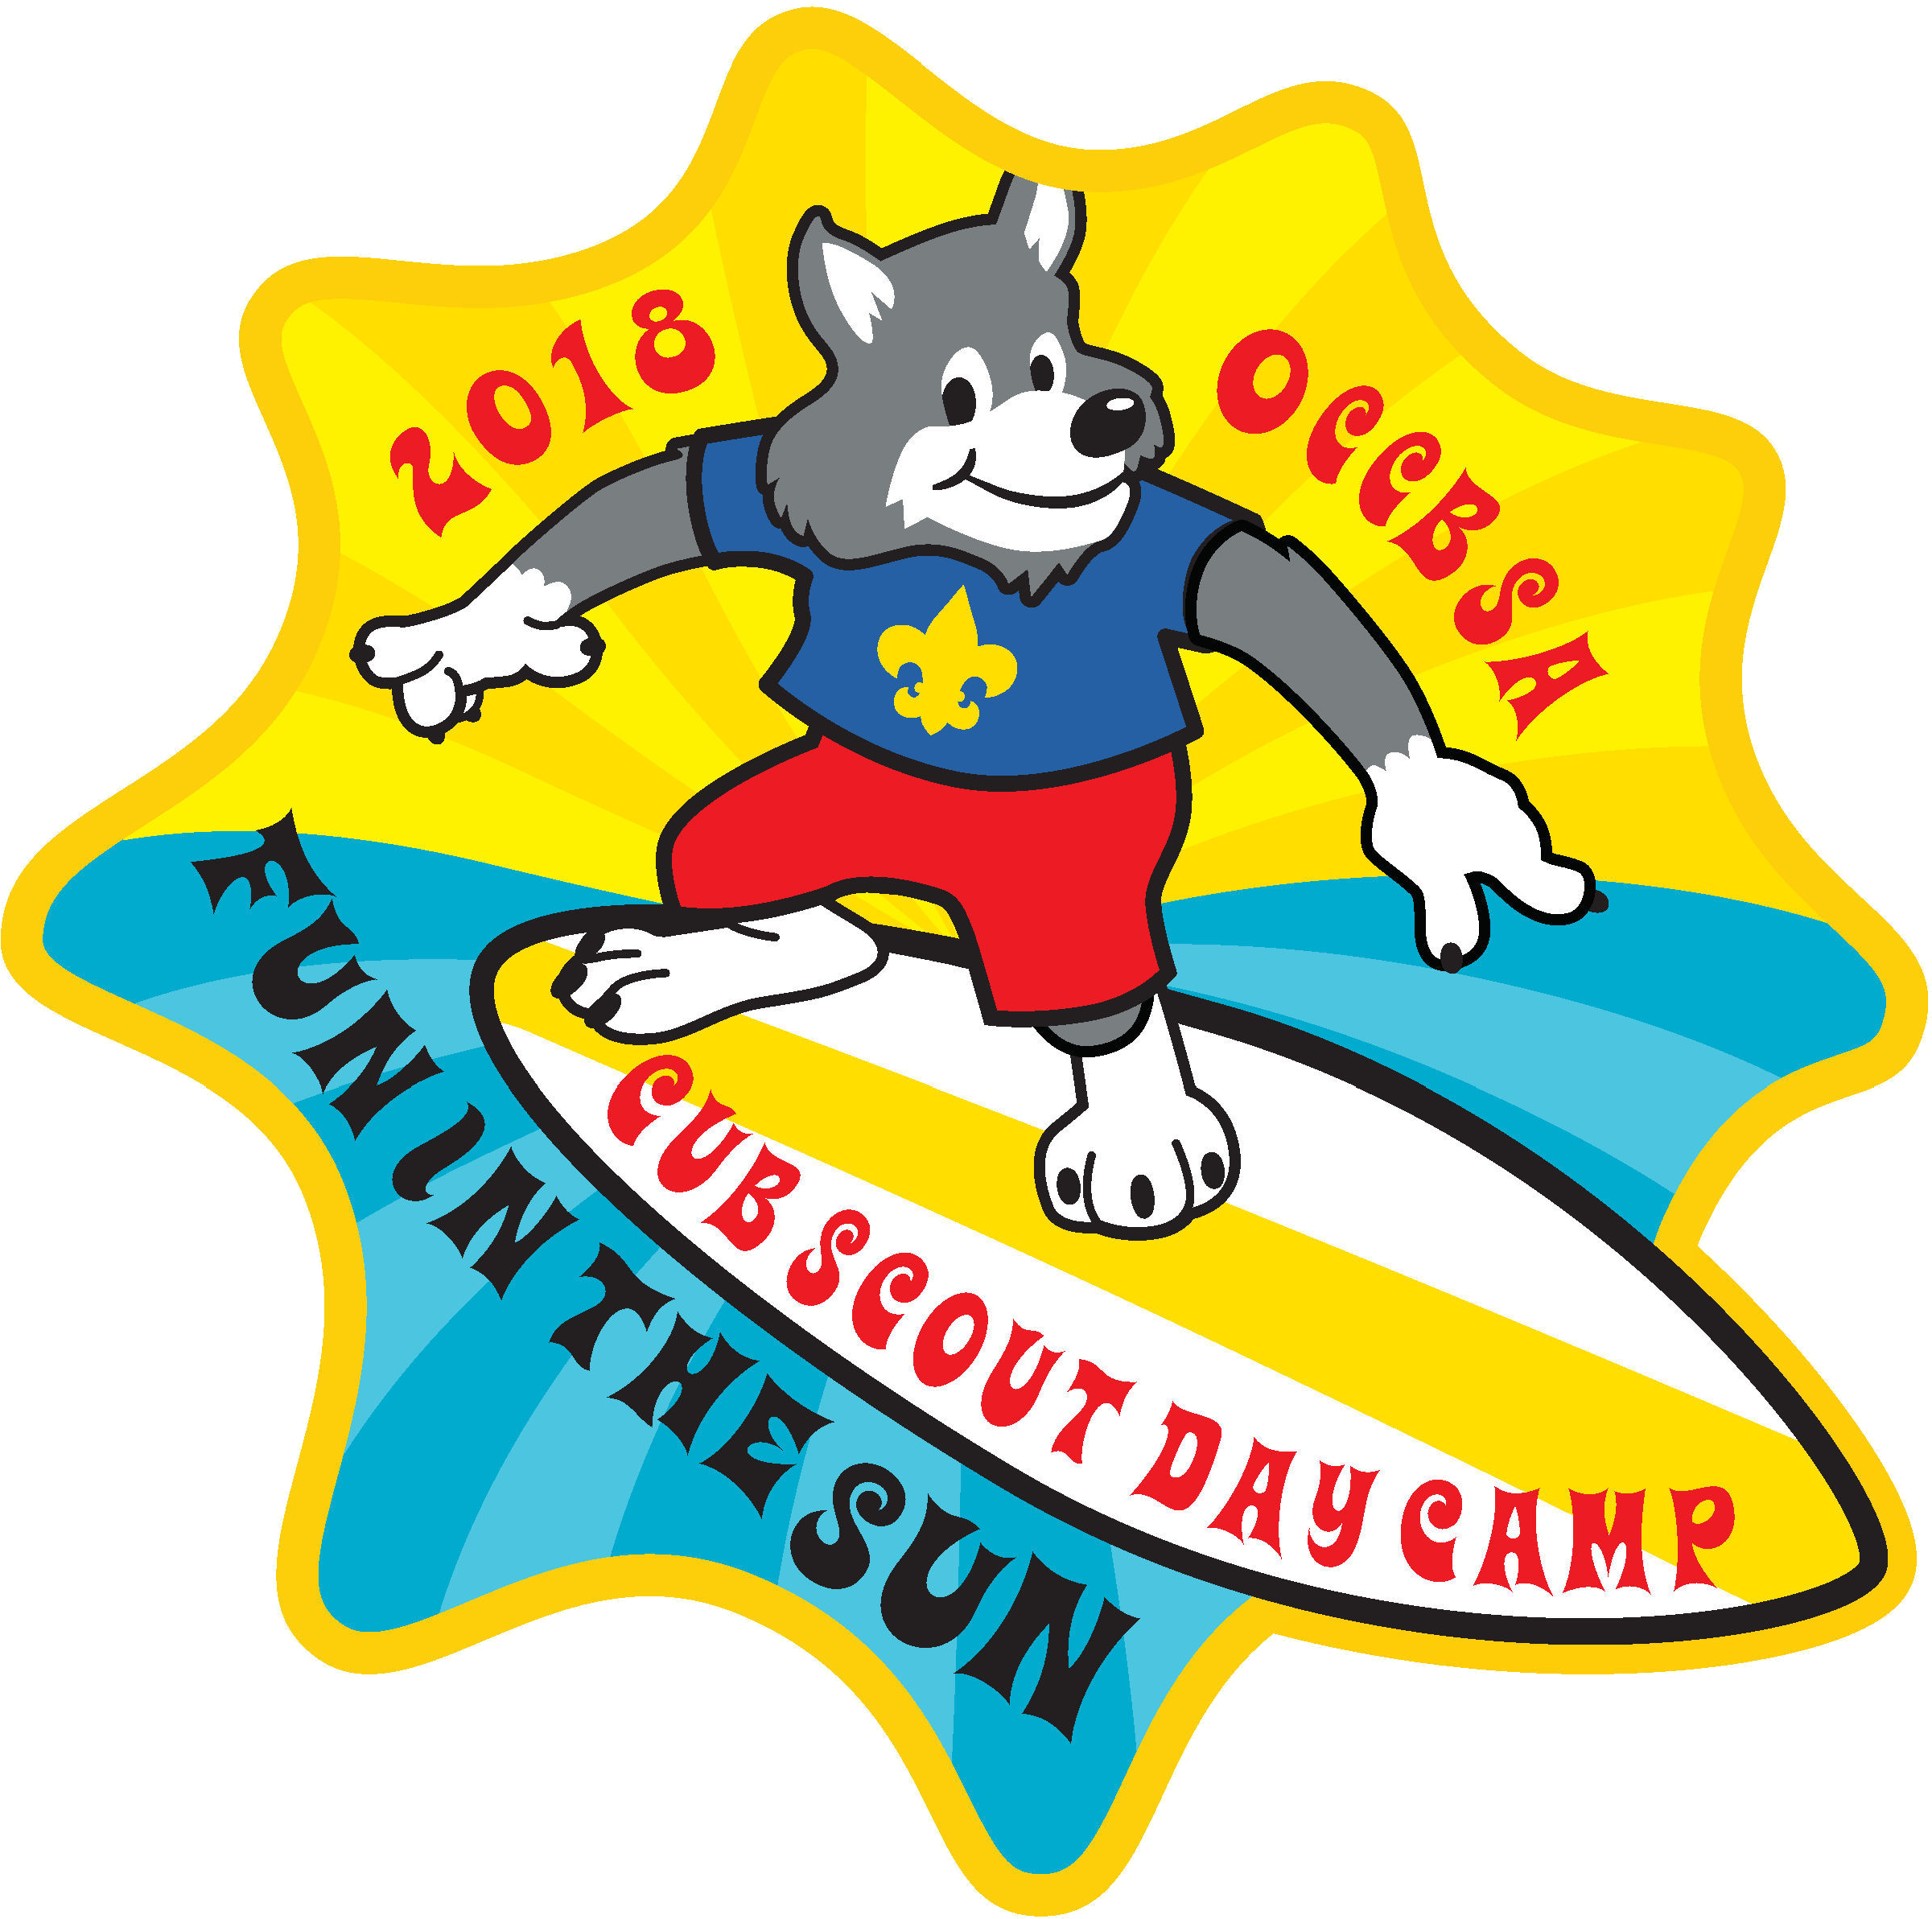 Portola's Cub Scout Daycamp - 2018 Day Camp (2411x2400)